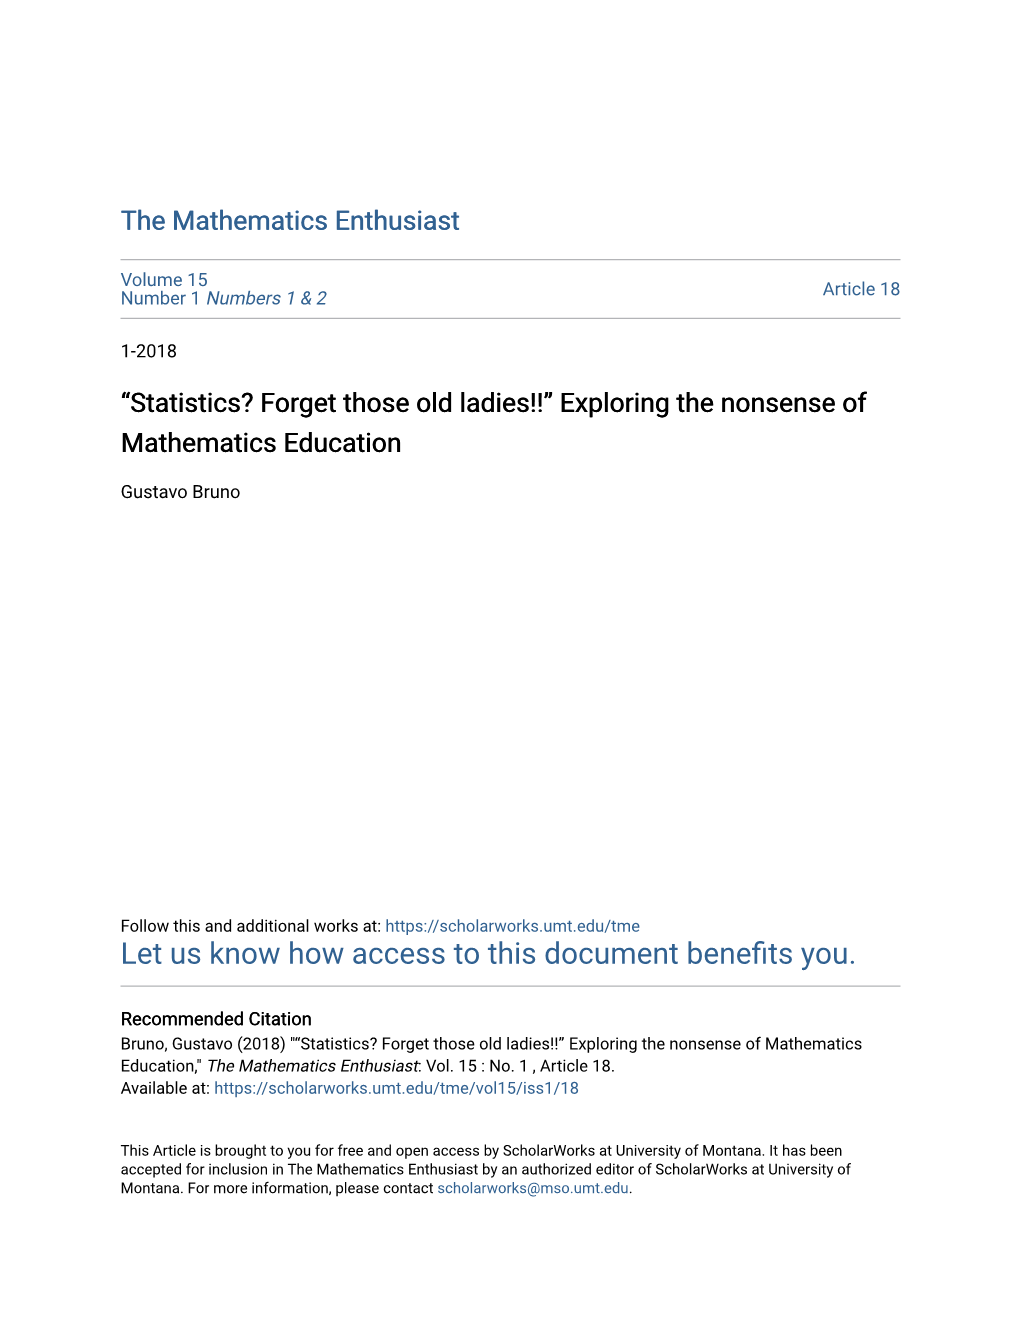 “Statistics? Forget Those Old Ladies!!” Exploring the Nonsense of Mathematics Education